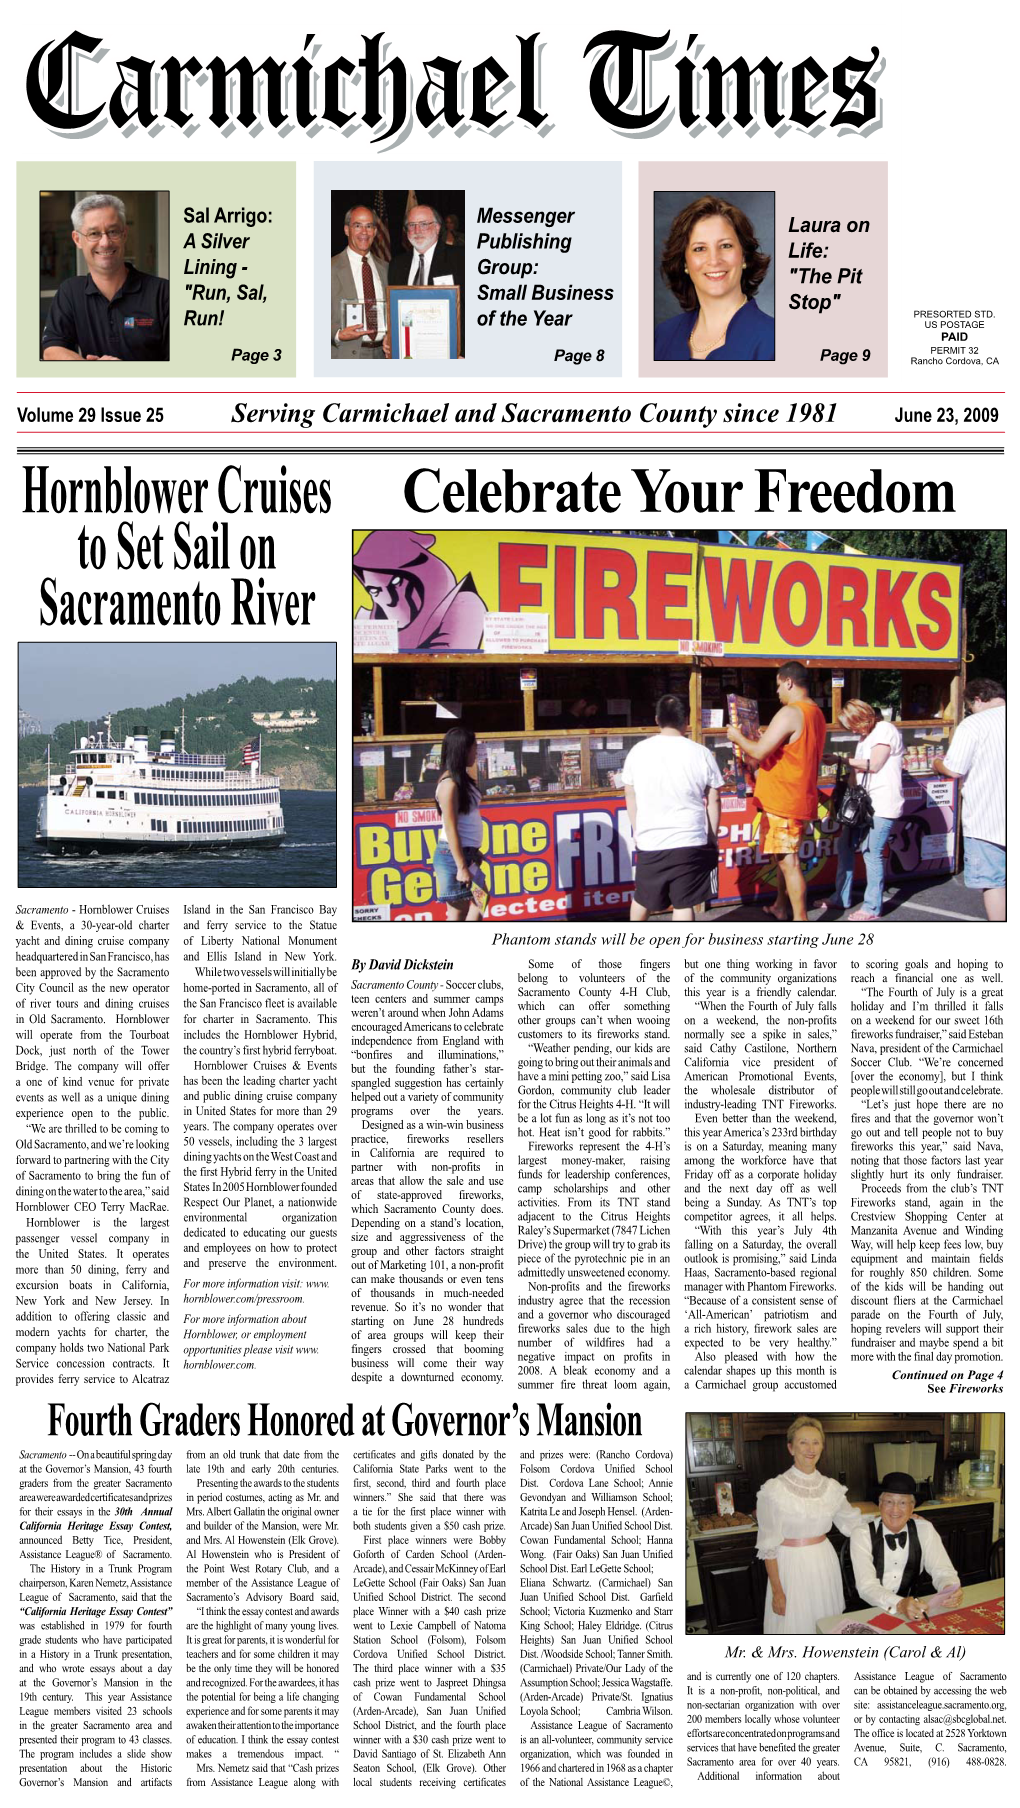 Hornblower Cruises to Set Sail on Sacramento River